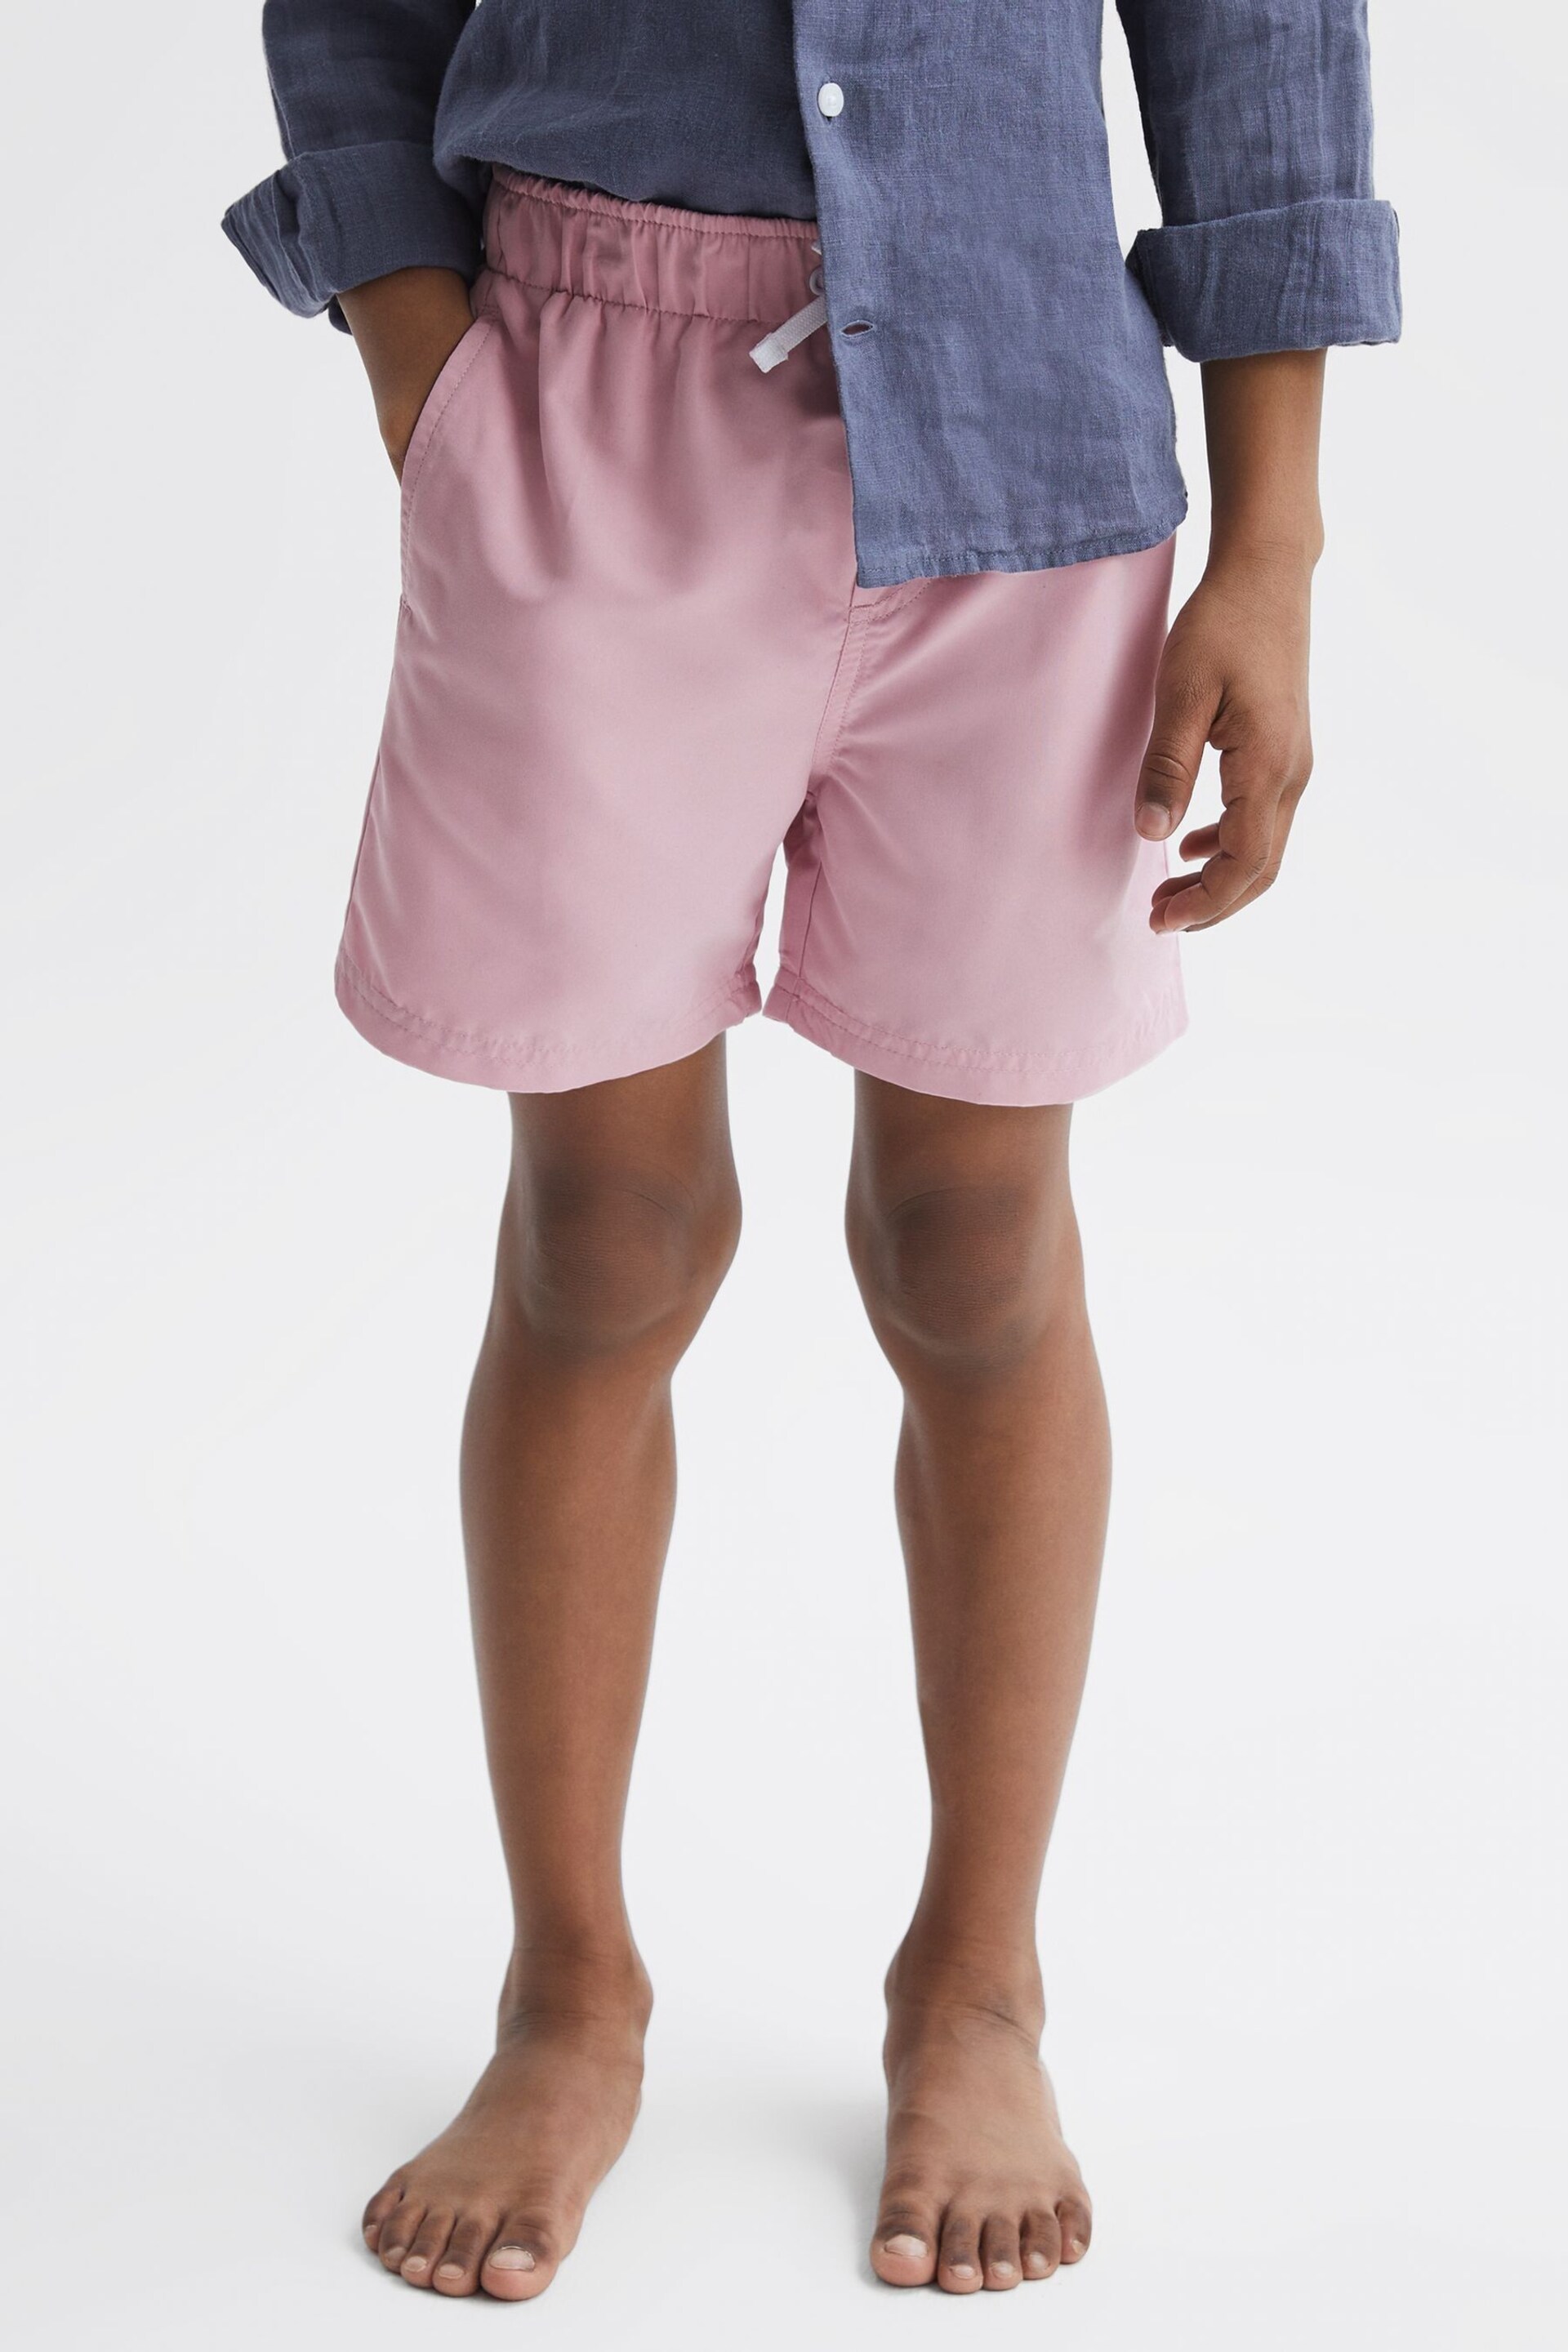 Reiss Soft Pink Wave Senior Plain Drawstring Swim Shorts - Image 3 of 7